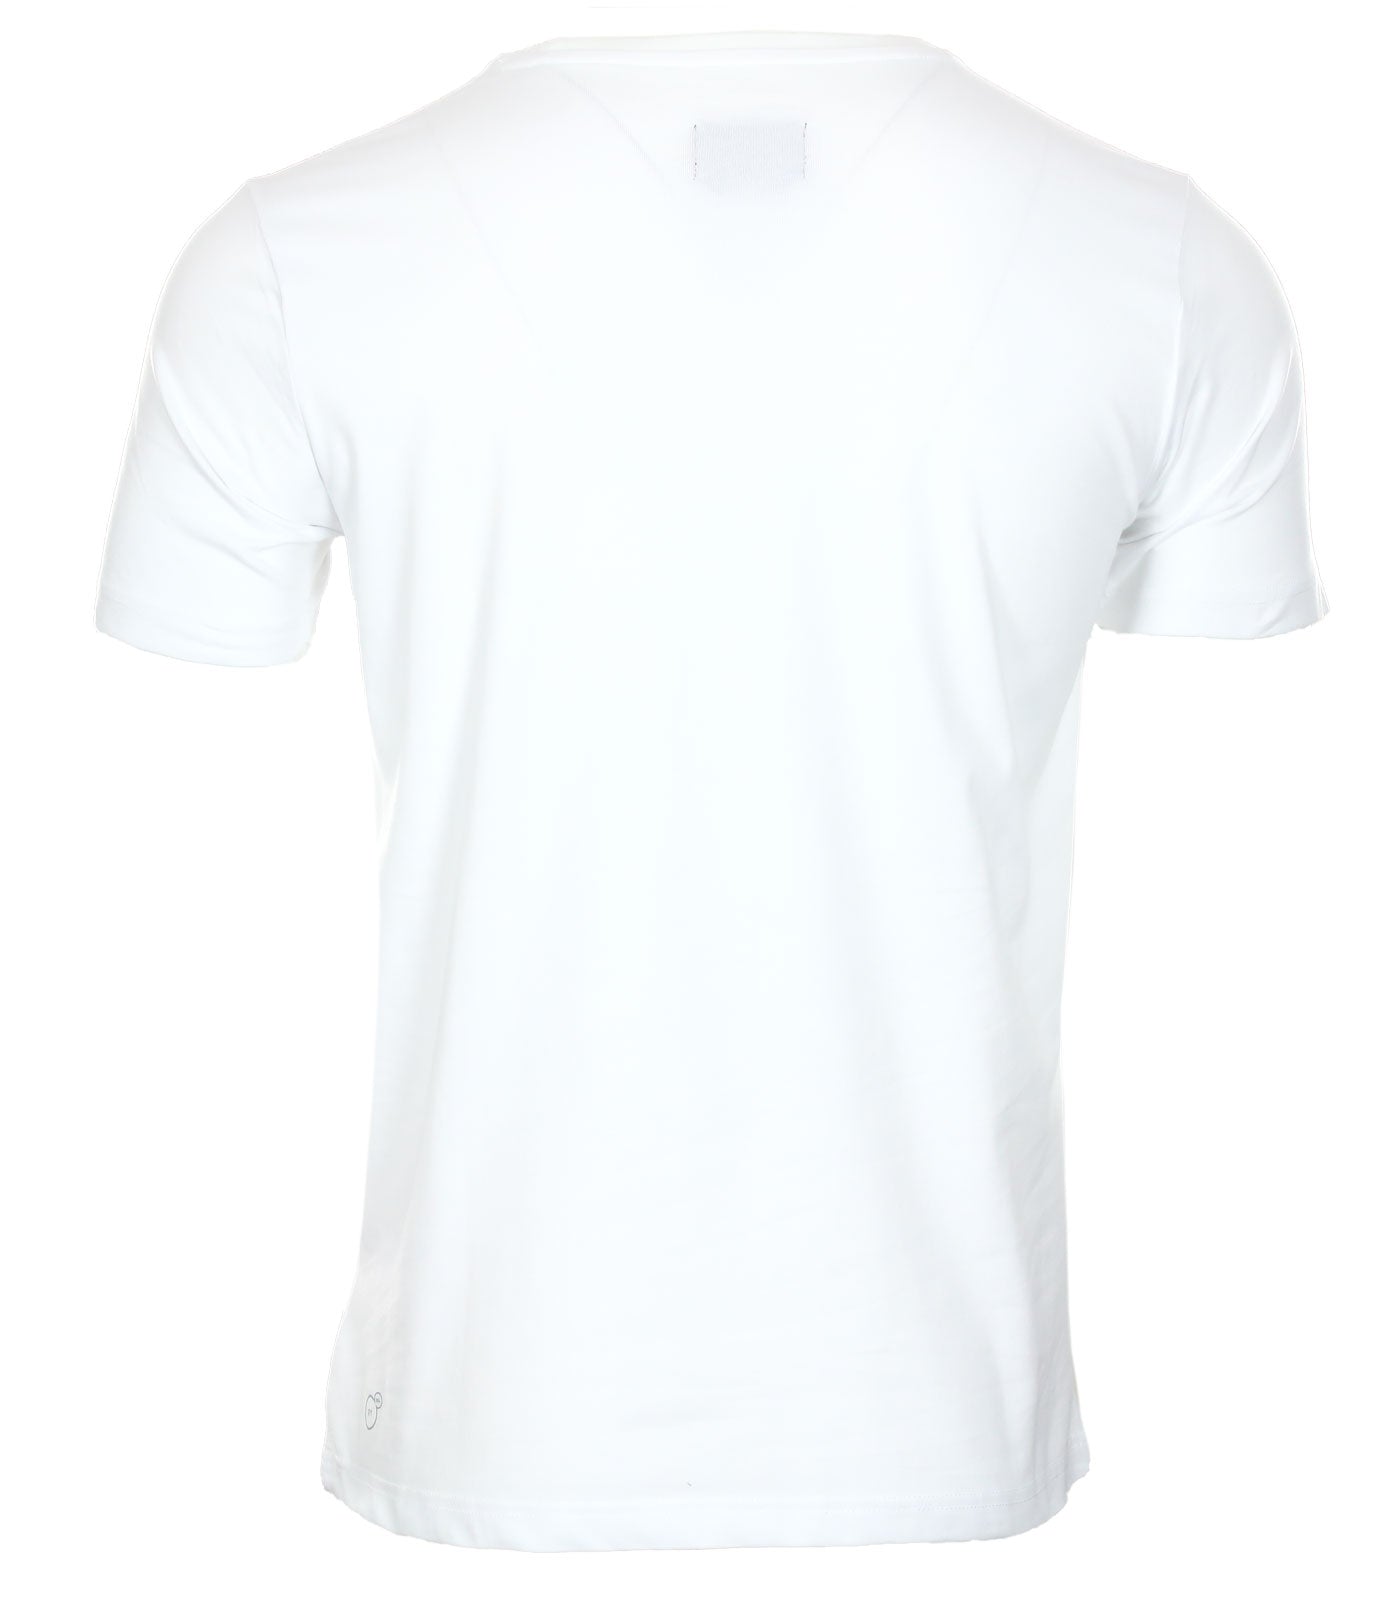 Puma Alife Olympic Logo kurzarm Herren T-Shirt Totenkopf Schädel Skull 570472 - Brand Dealers Arena e.K. - BDA24